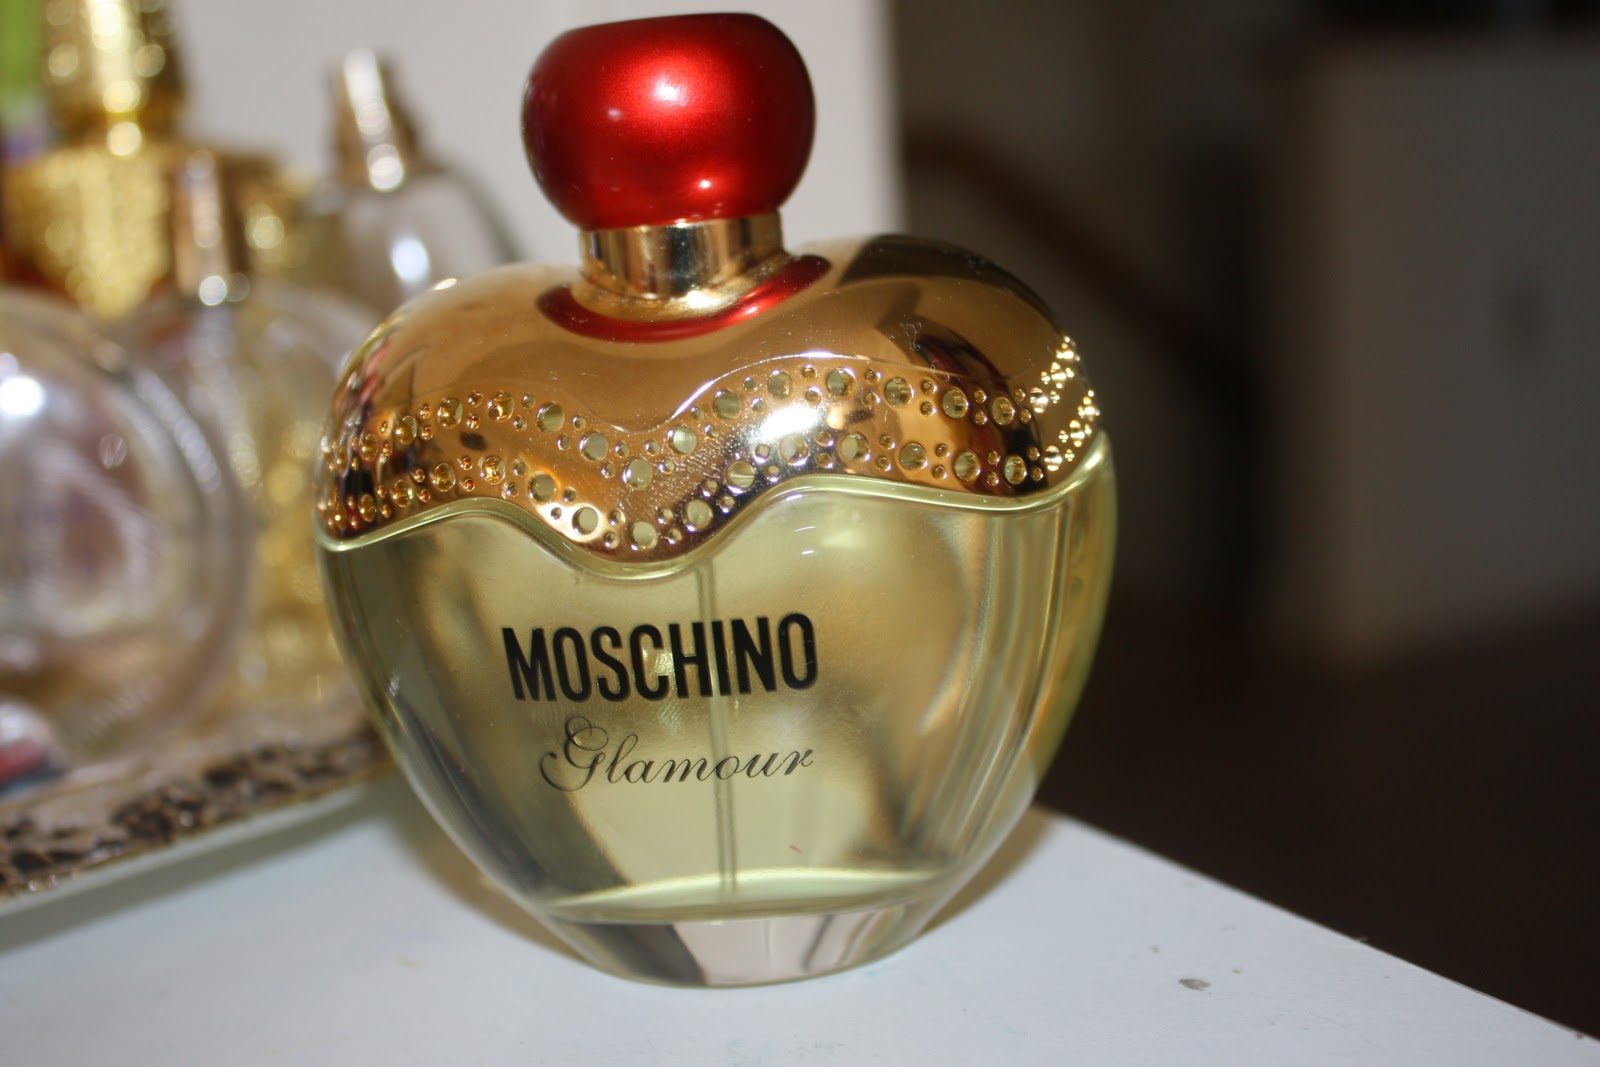 Moroccan beauty secrets: My favorite perfume and body spray